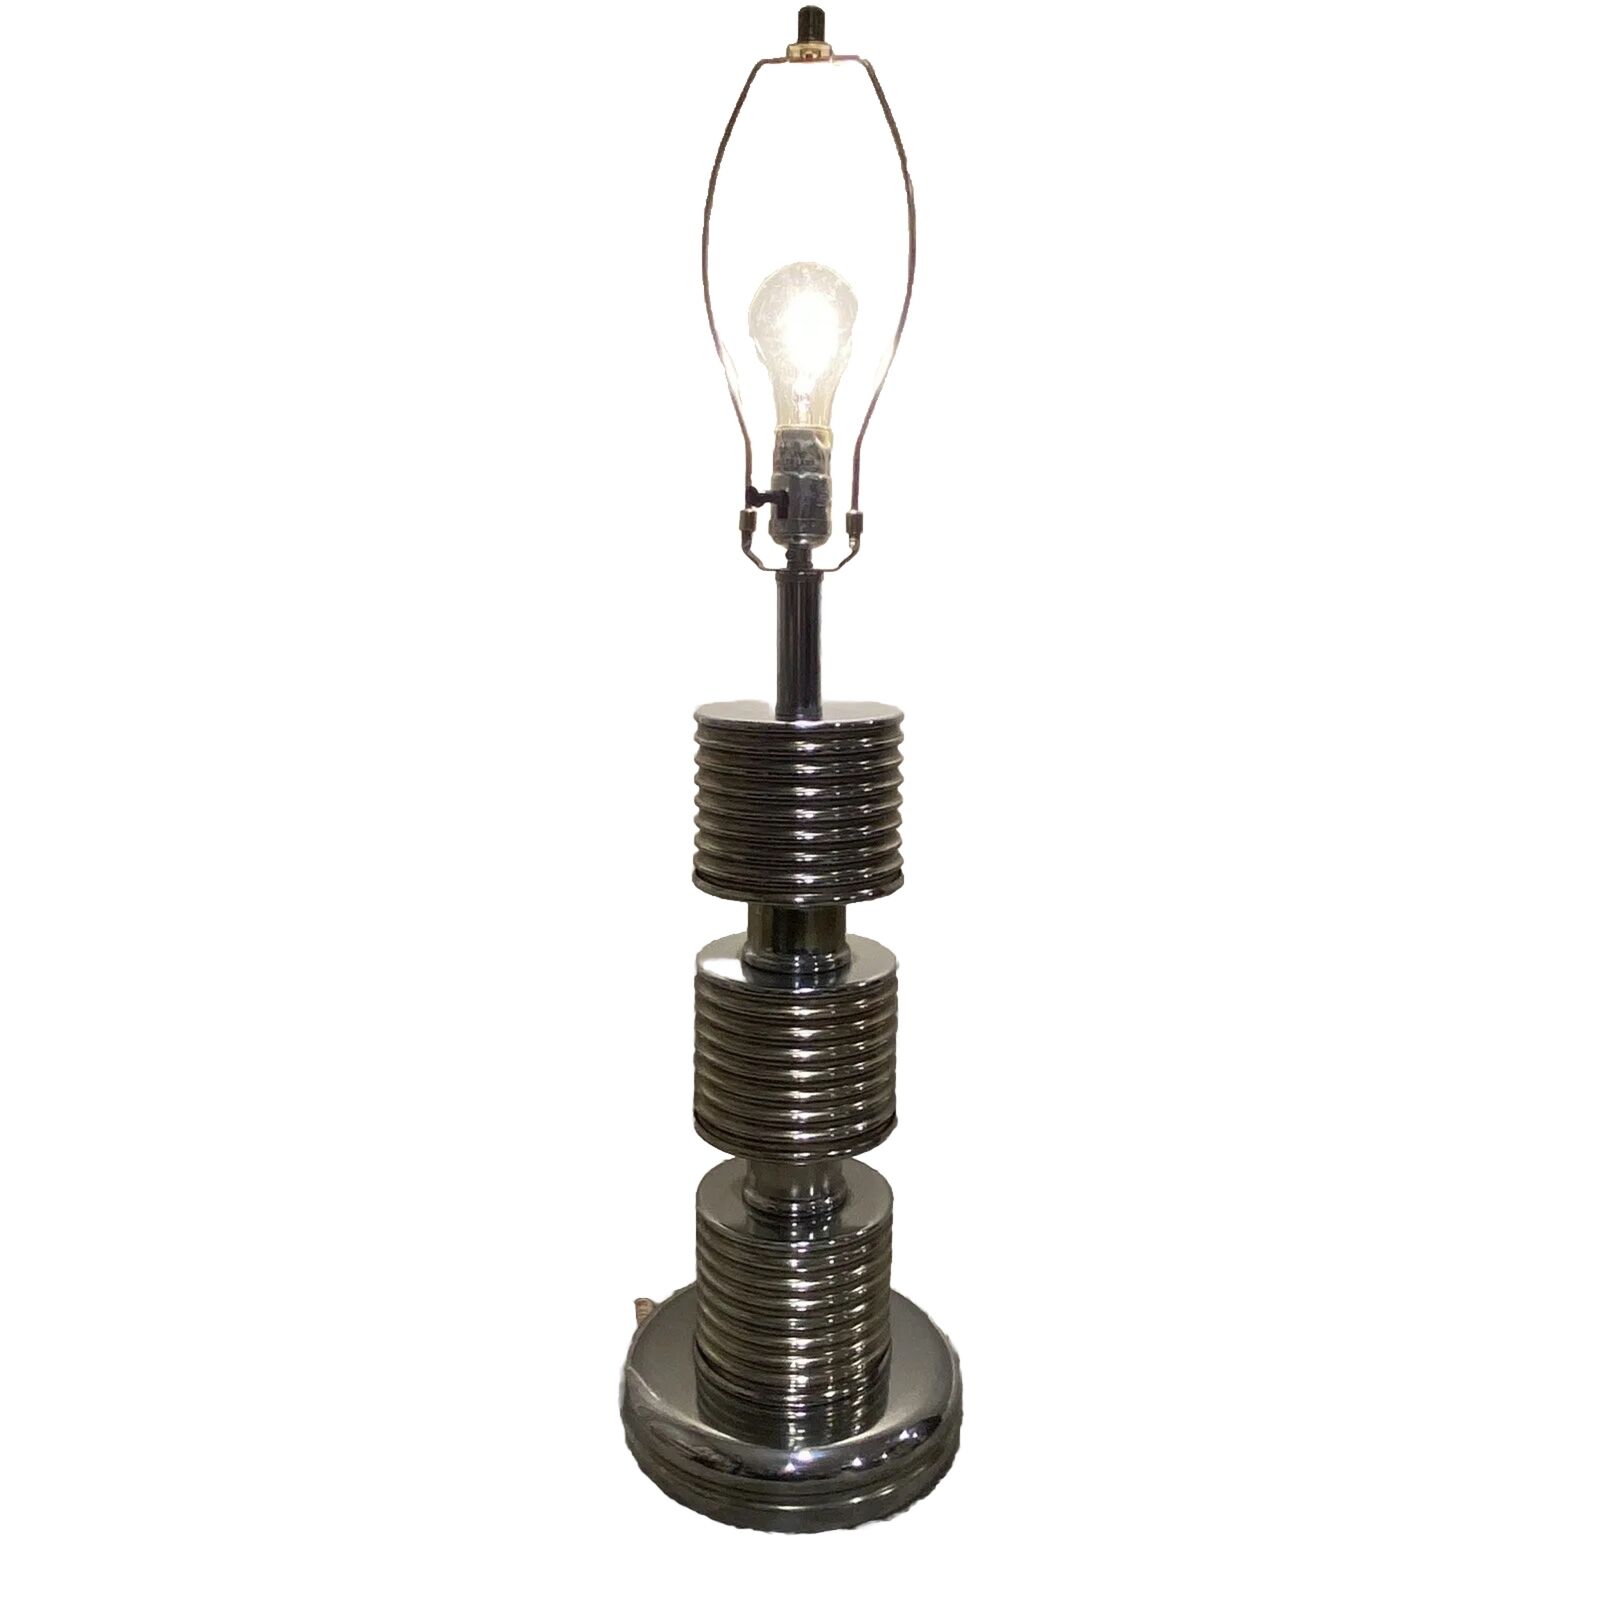 Vintage Art Deco Chrome Table Lamp Industrial Cylinder MCM Lighting 1970’s-80’s